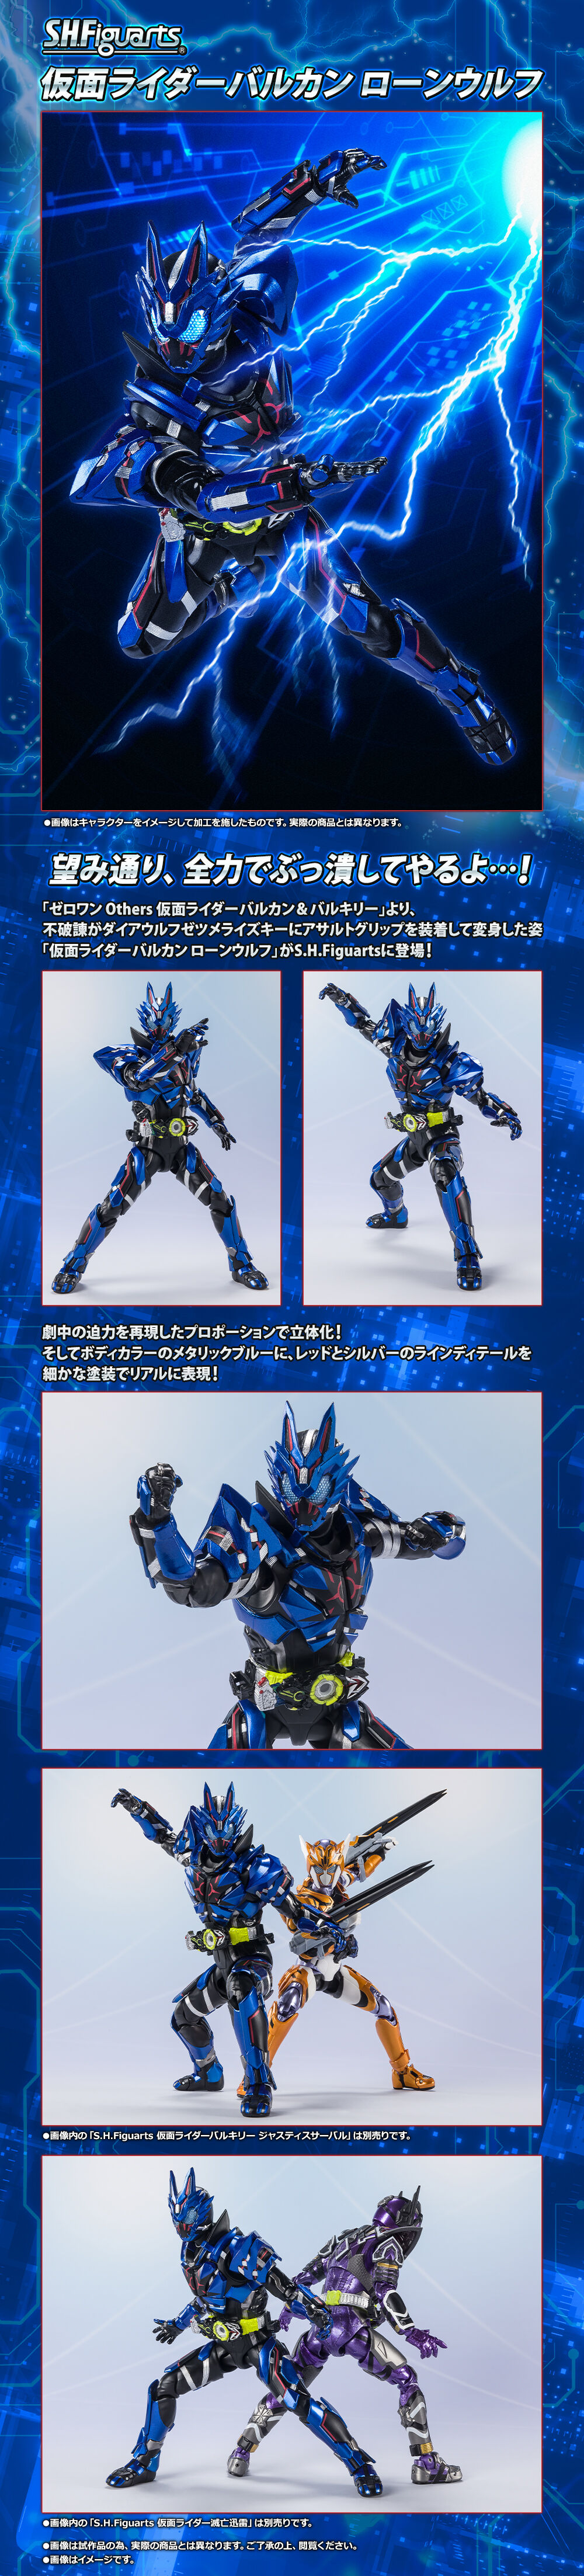 S.H.Figuarts Kamen Rider VULCAN LONEWOLF Action Figure